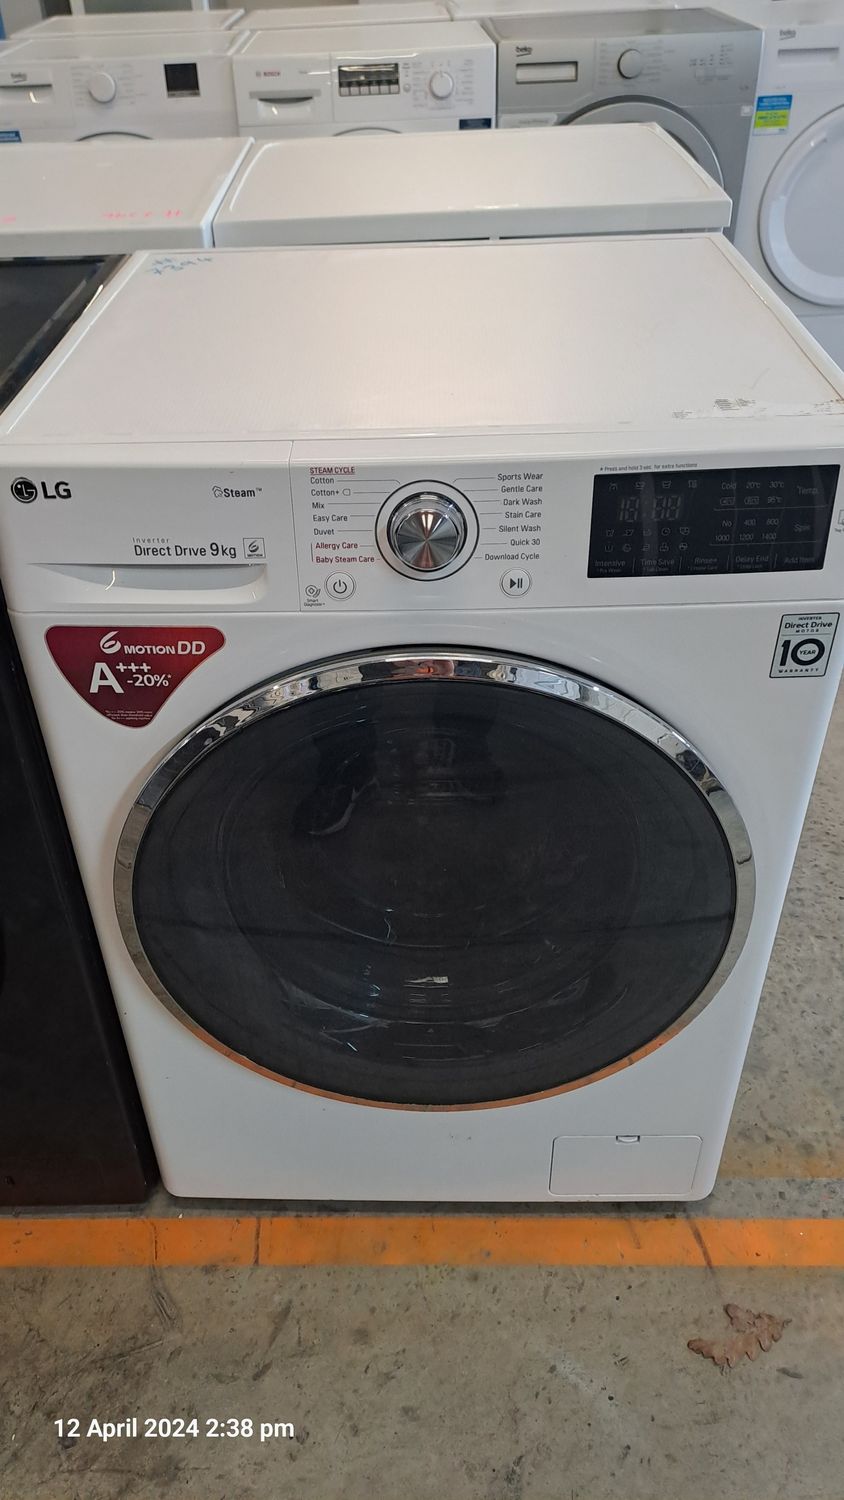 LG F4J6VY2W 9kg Load 1400 Spin Steam Cycle Washing Machine White Refurbished W60cm D56cm H85cm